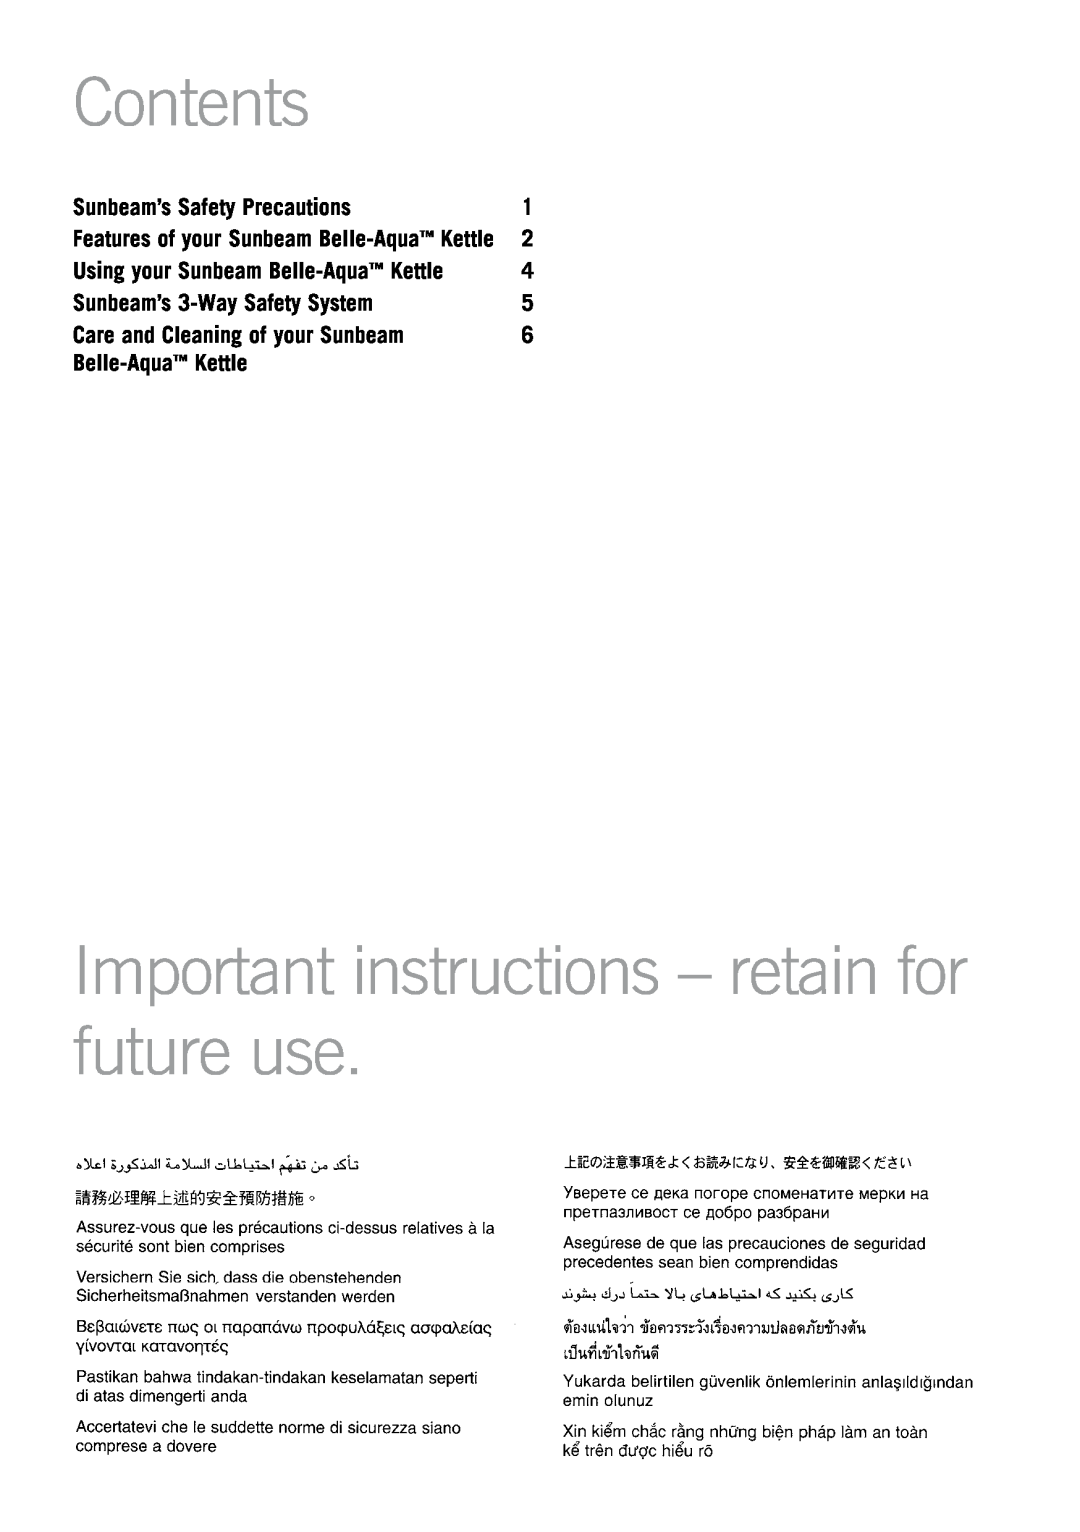 Sunbeam KE7110 Contents, Important instructions - retain for future use, Sunbeam’s Safety Precautions, Belle-Aqua Kettle 